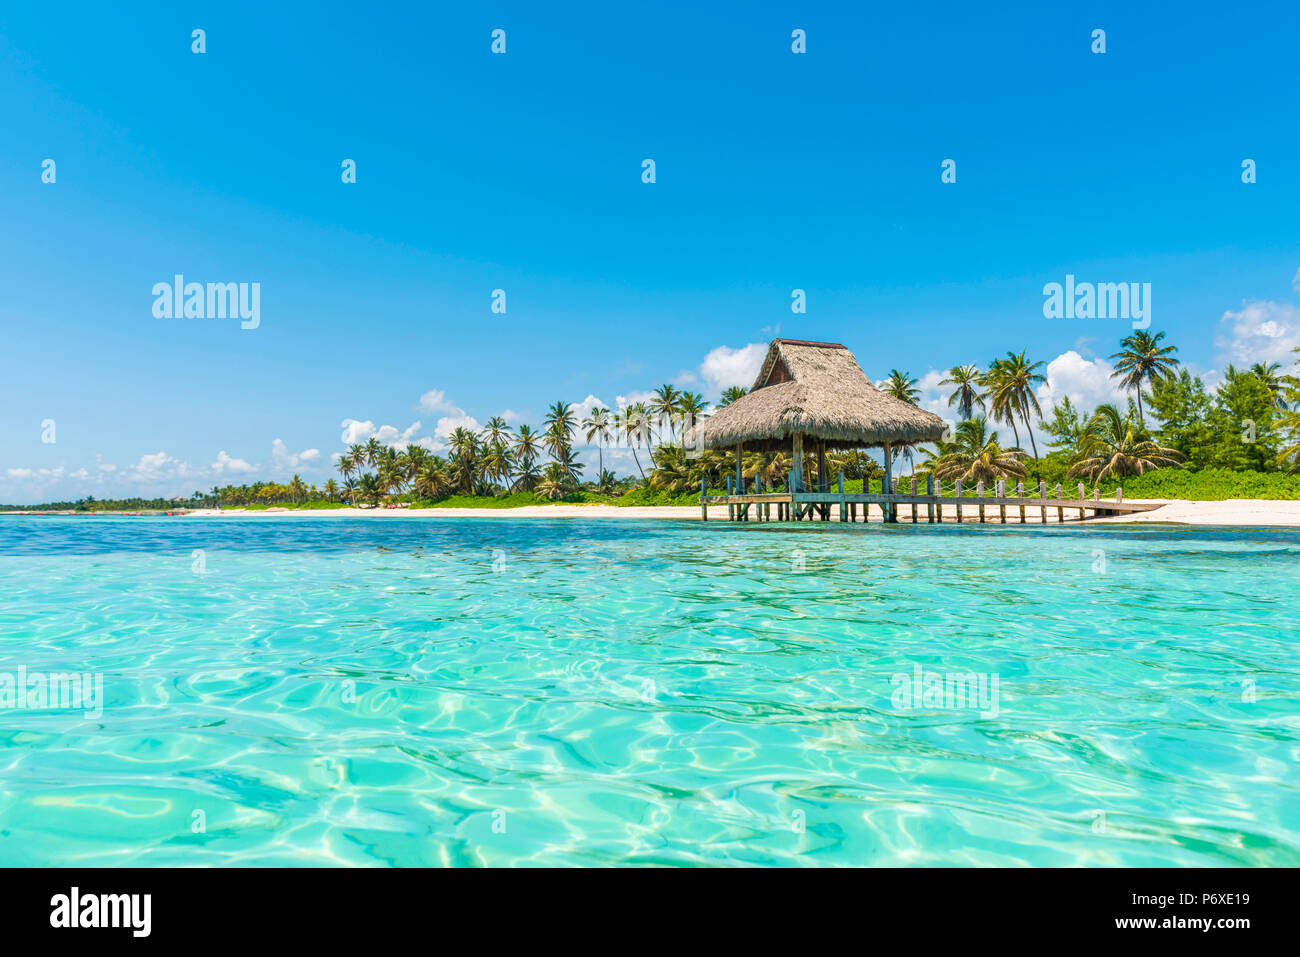 Playa Blanca, Punta Cana, República Dominicana, Mar Caribe. Choza de paja en la playa. Foto de stock